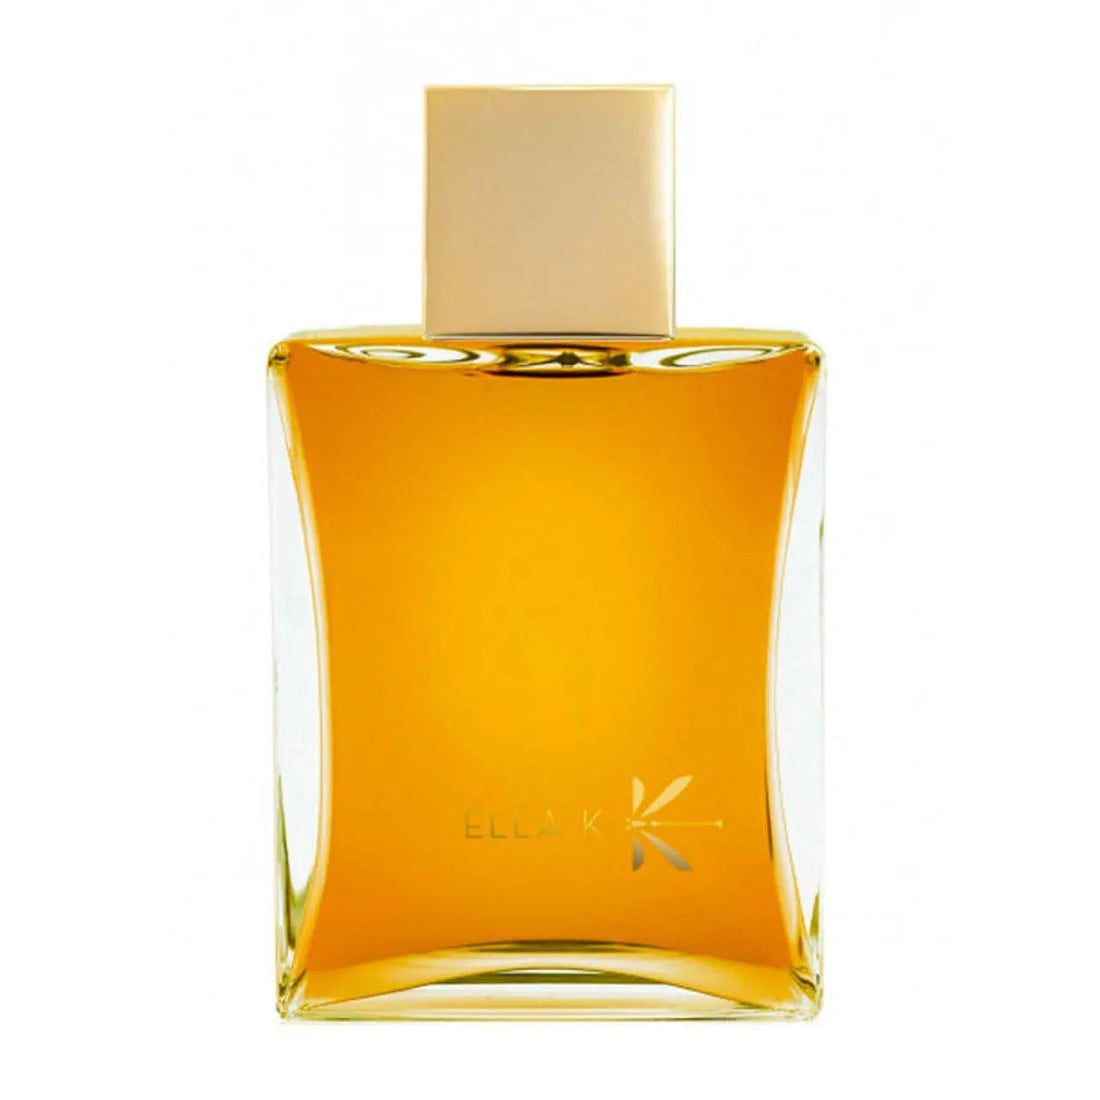 Ella k perfumes KHAMSIN eau de parfum - 100 ml